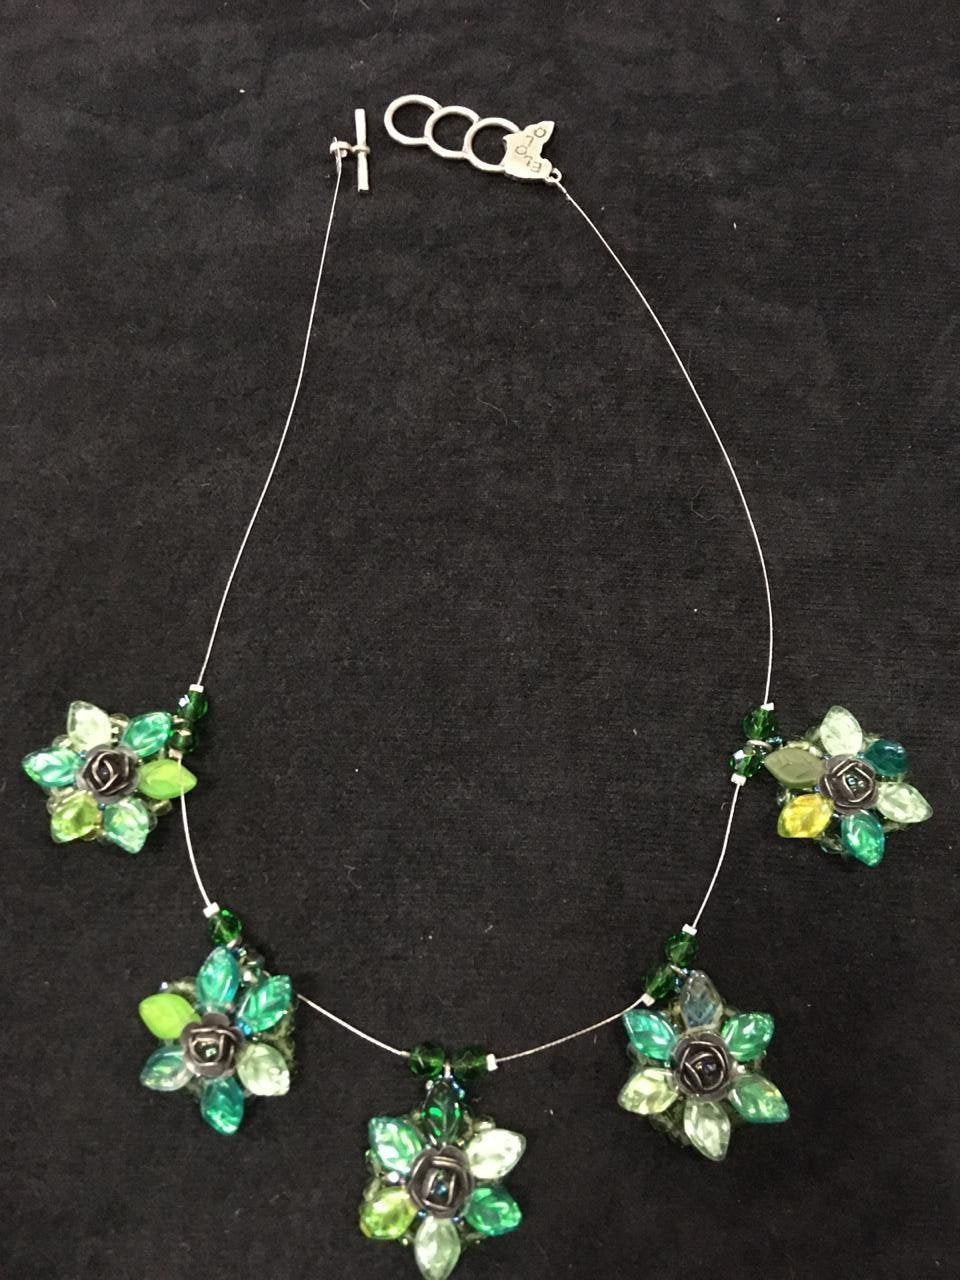 Green Flower Necklace - 2ndhandwarehouse.com